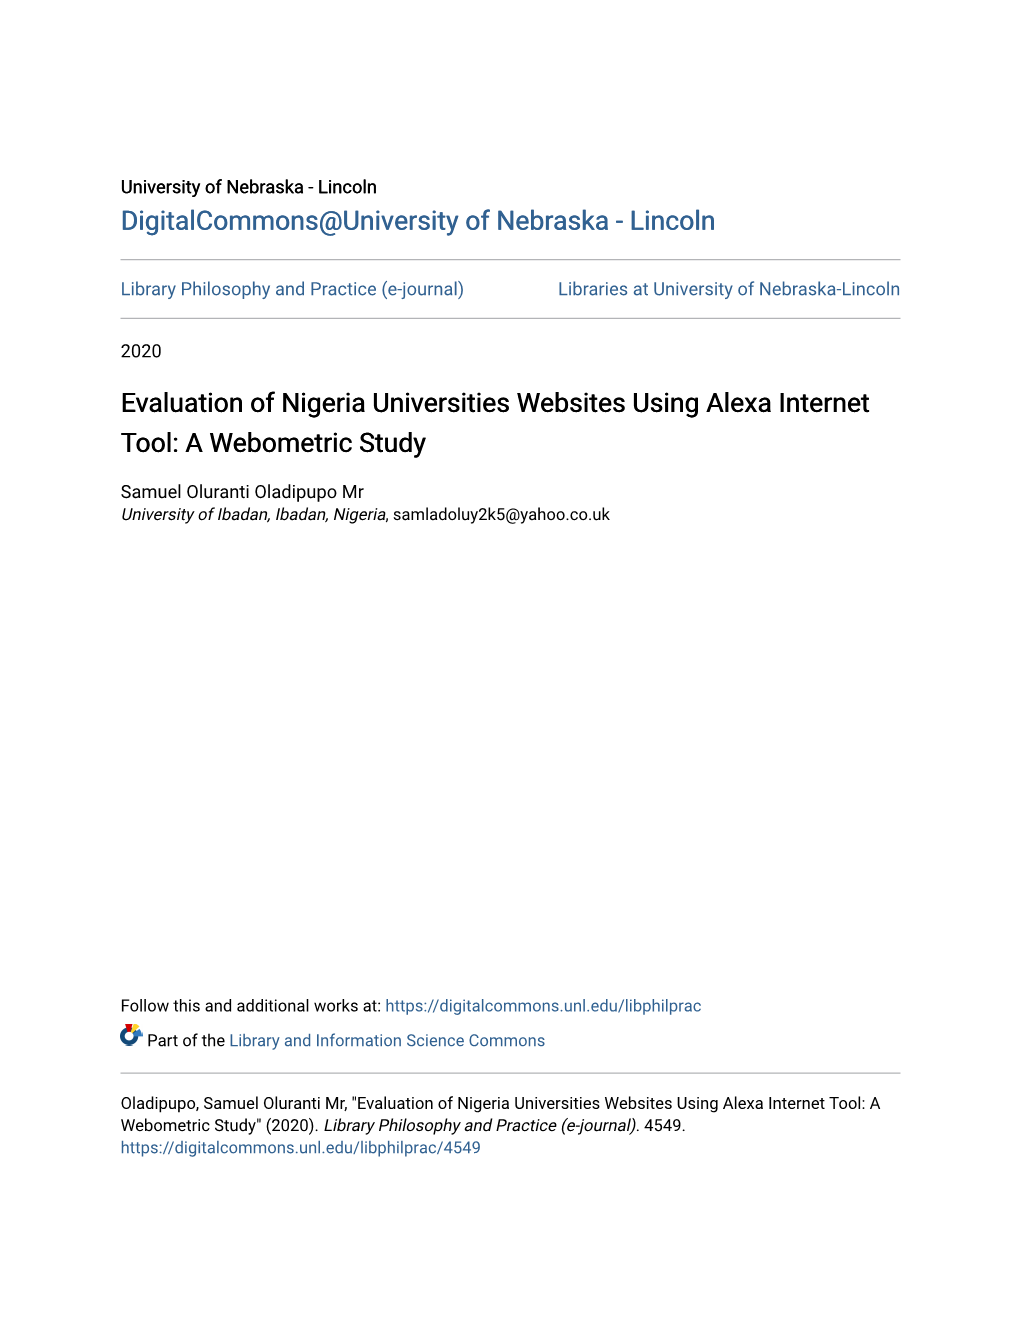 Evaluation of Nigeria Universities Websites Using Alexa Internet Tool: a Webometric Study